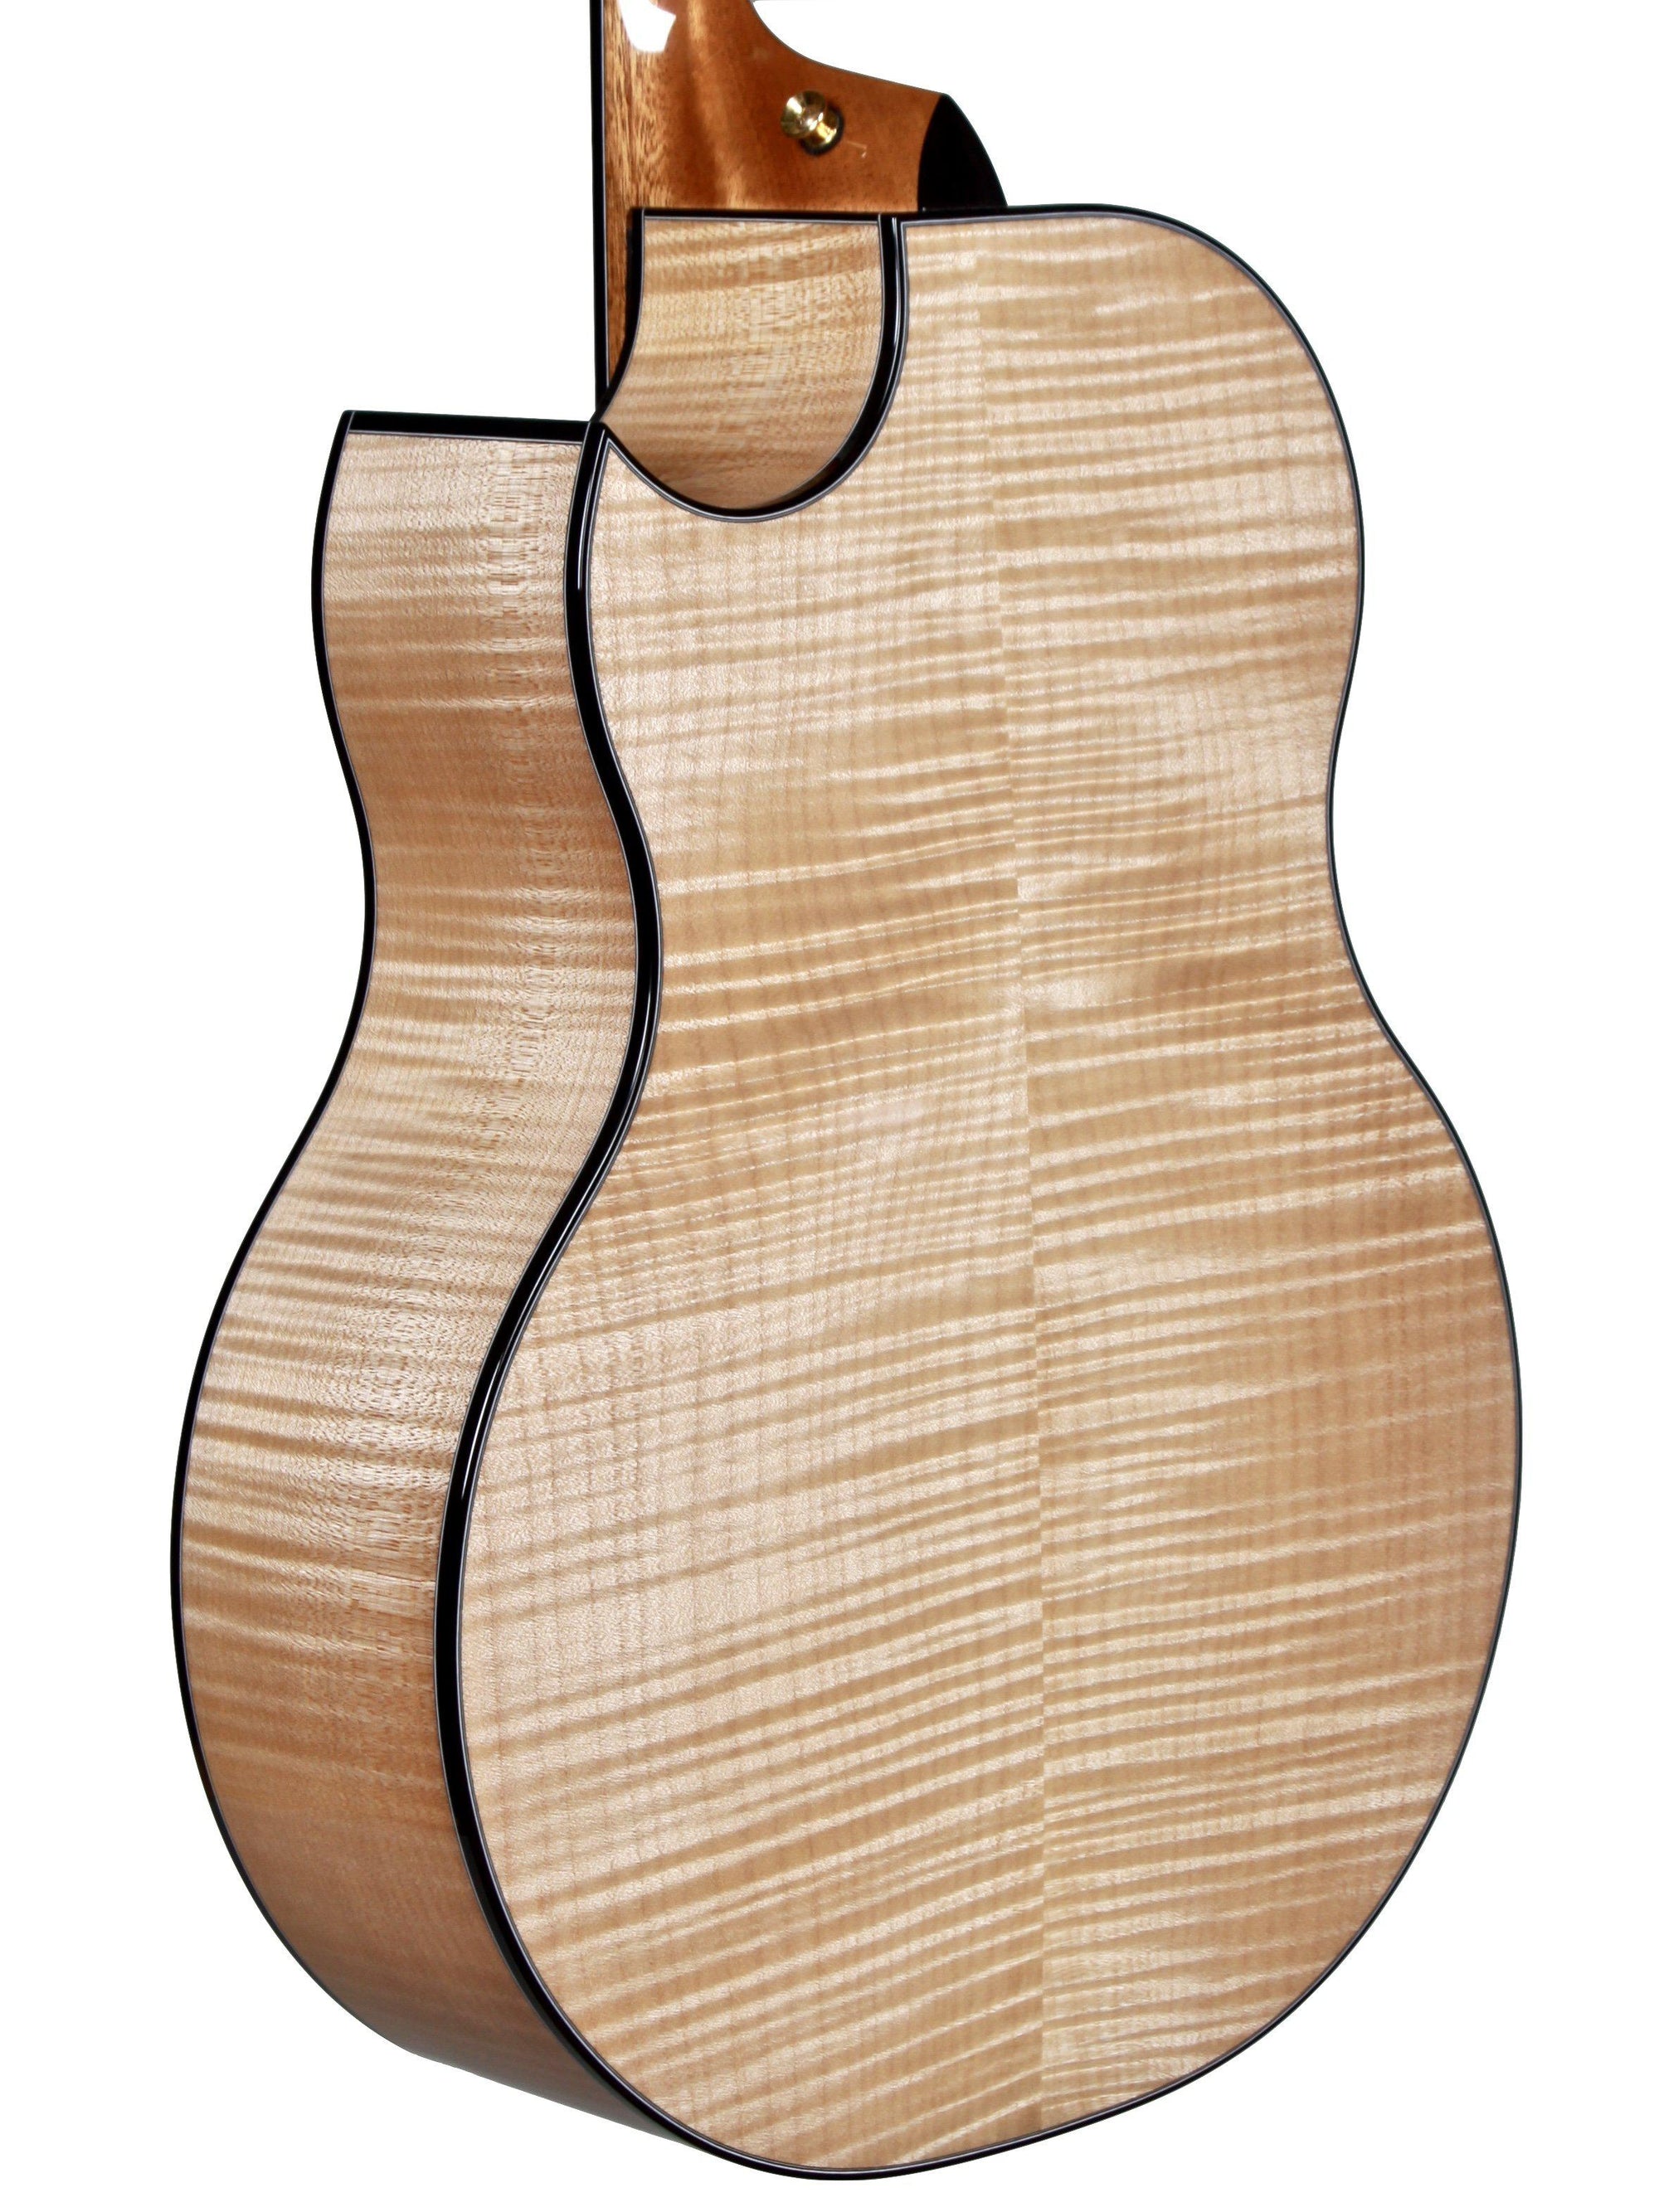 McPherson Camrielle 4.5 Bearclaw Spruce / Flamed Maple #2531 - McPherson Guitars - Heartbreaker Guitars